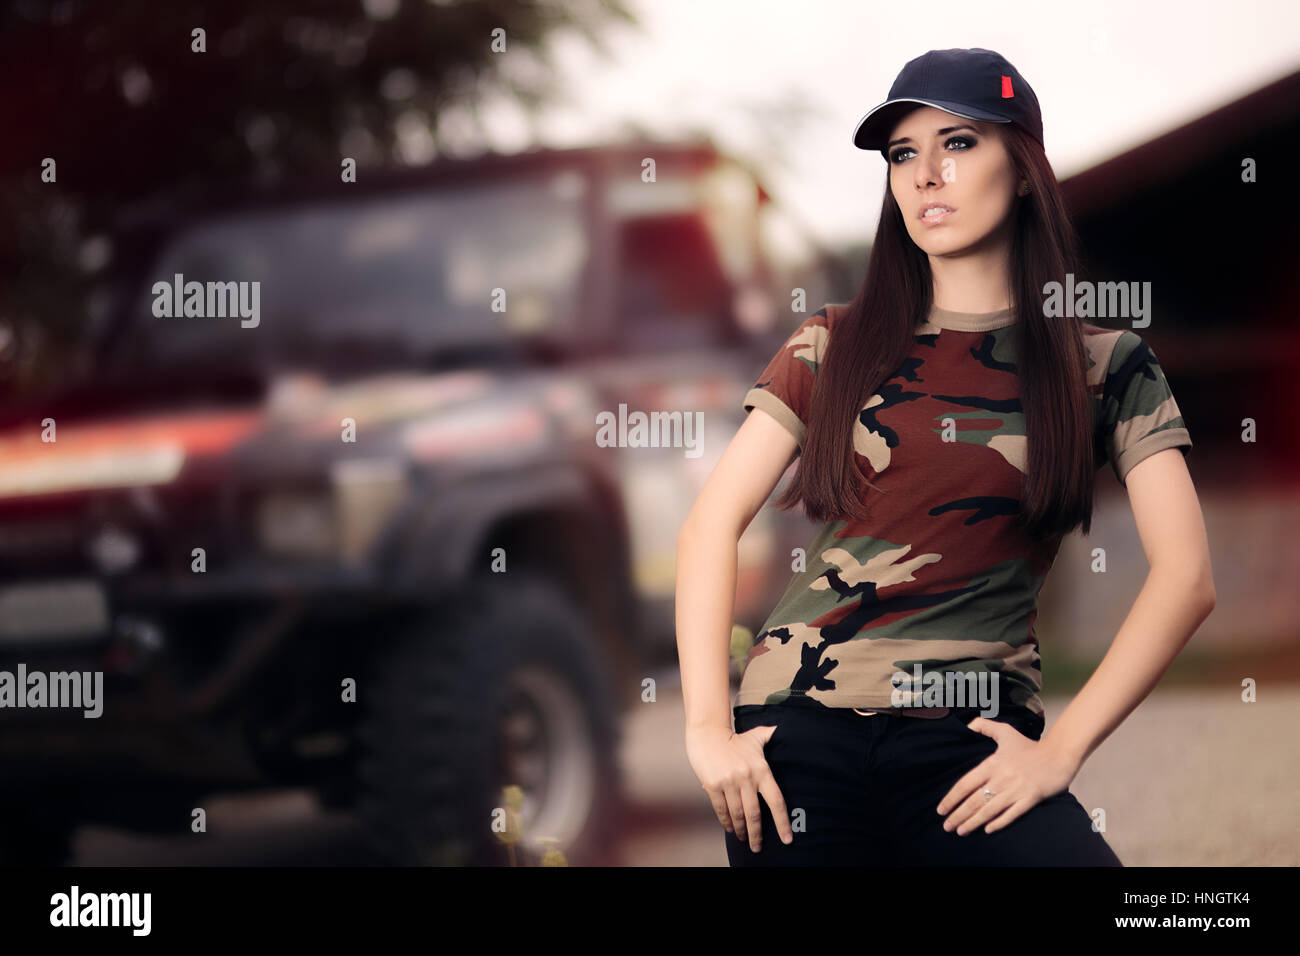 Fahrerin im Army-Outfit neben einem Off-Road Auto Stockfoto